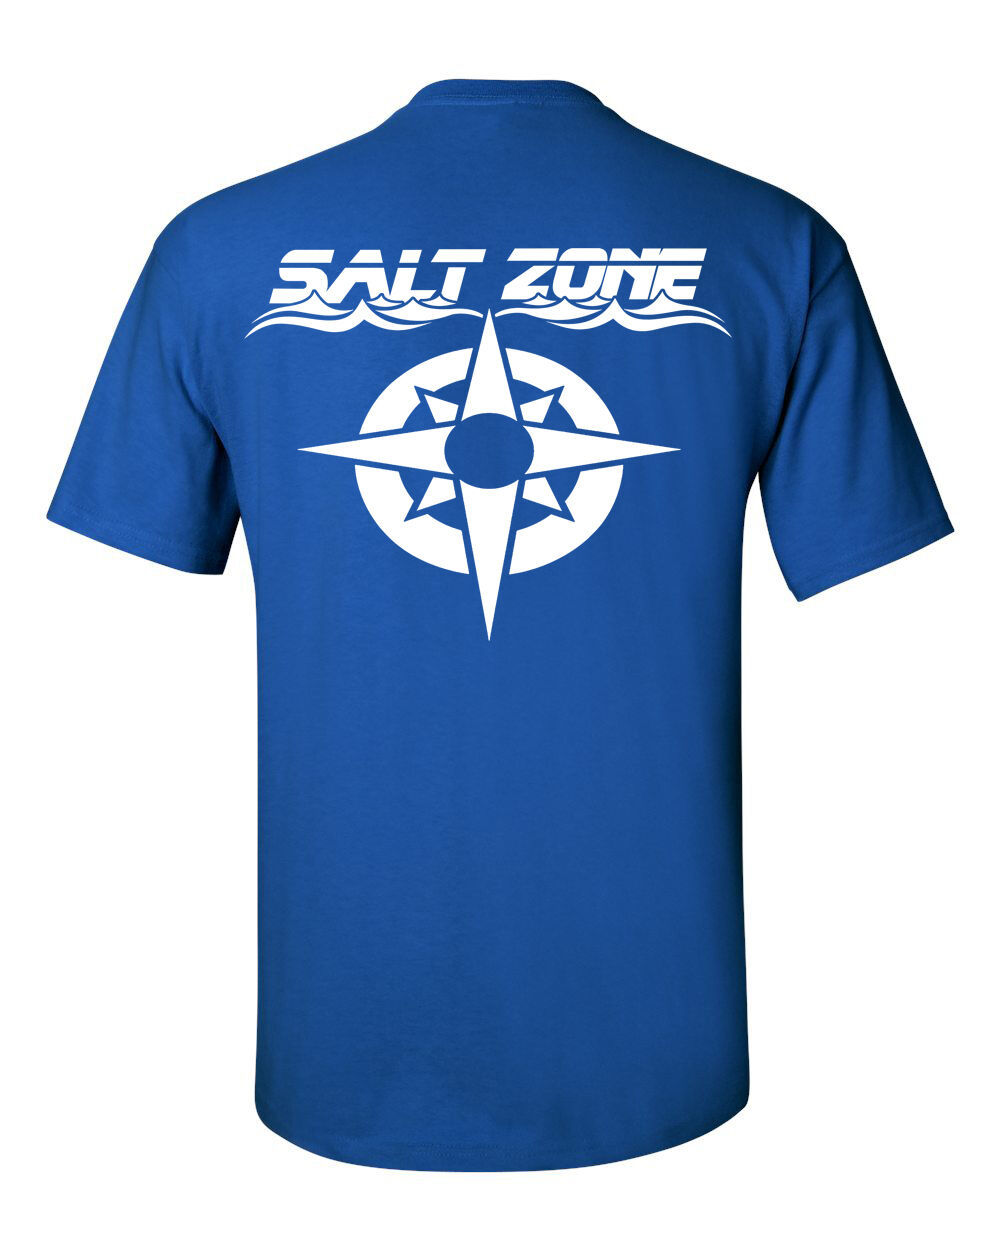 Salt Zone Ultra Performance Wear,saltwater short sleeve fishing shirt,reel, life